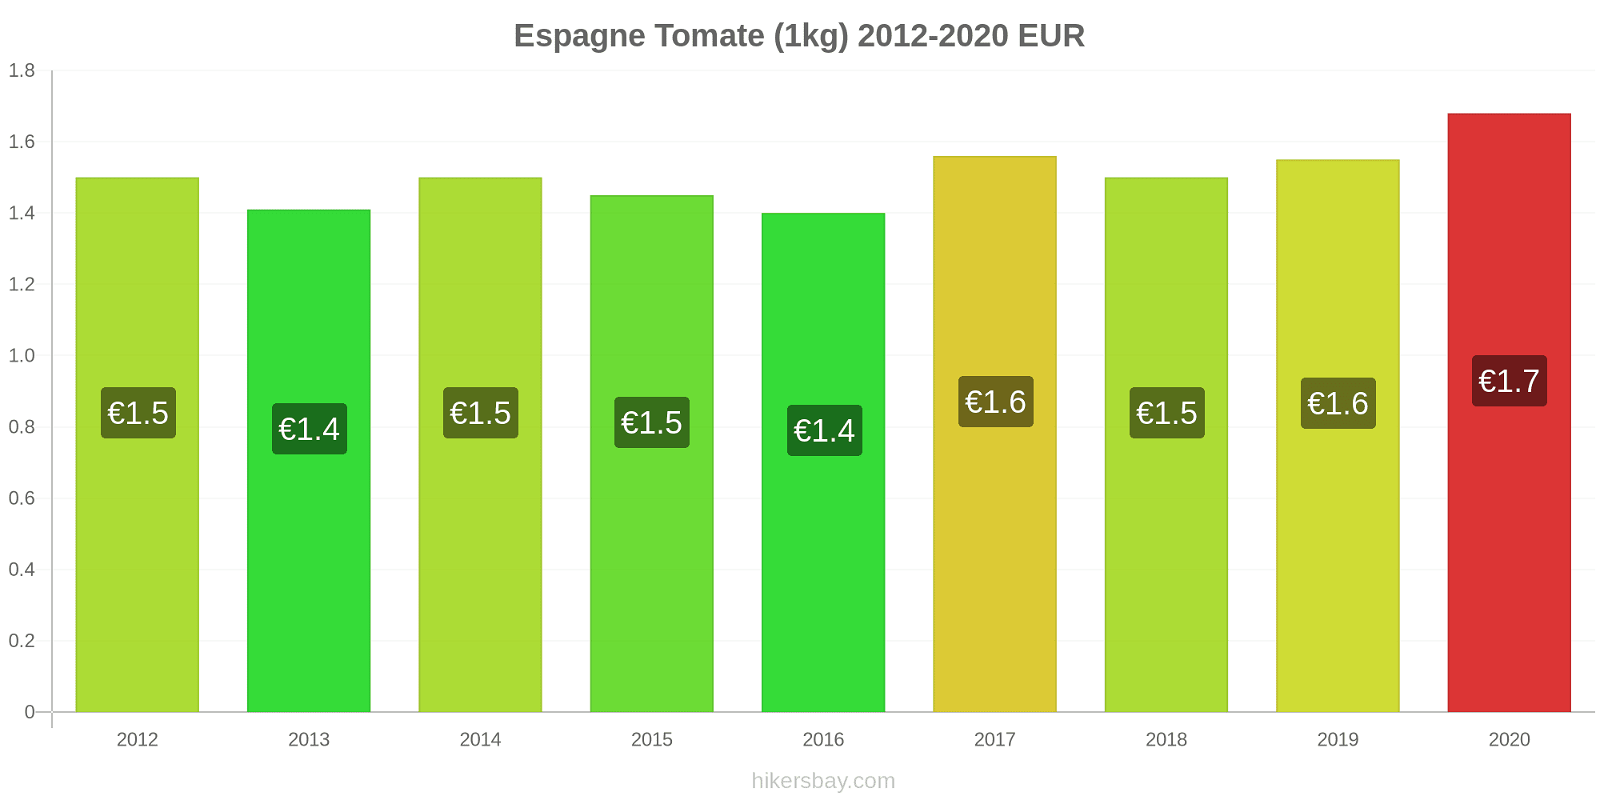 Espagne changements de prix Tomate (1kg) hikersbay.com